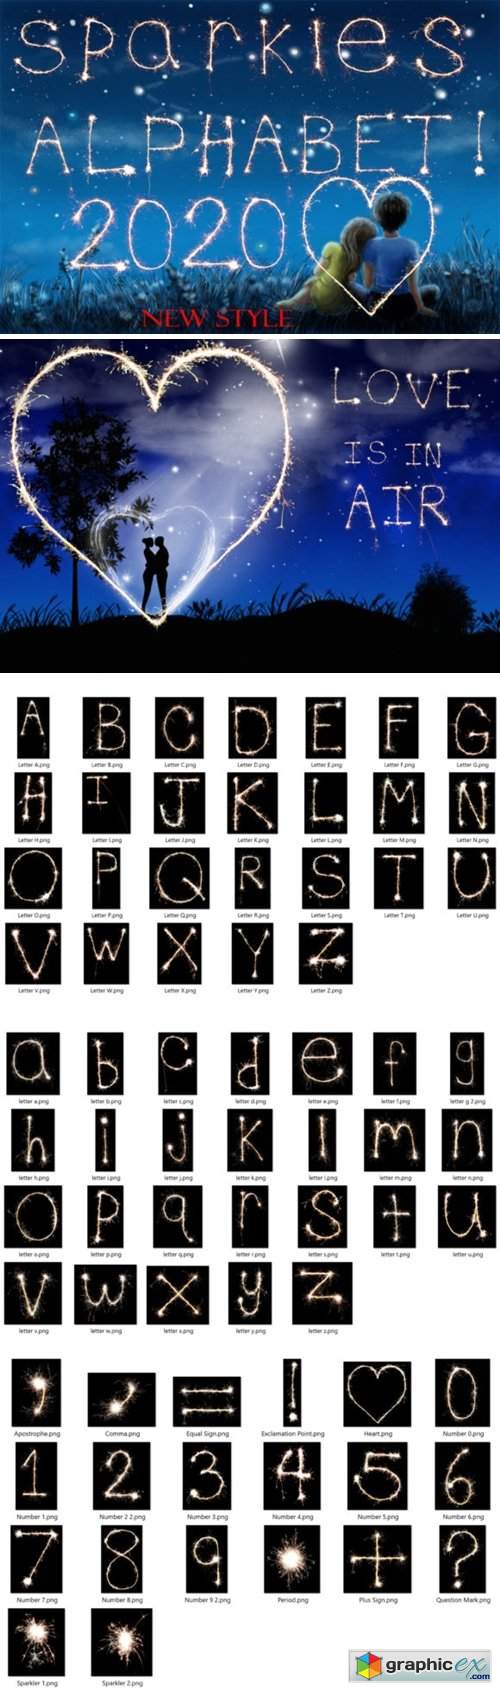  72 Sparklers Alphabet Photo Overlays 